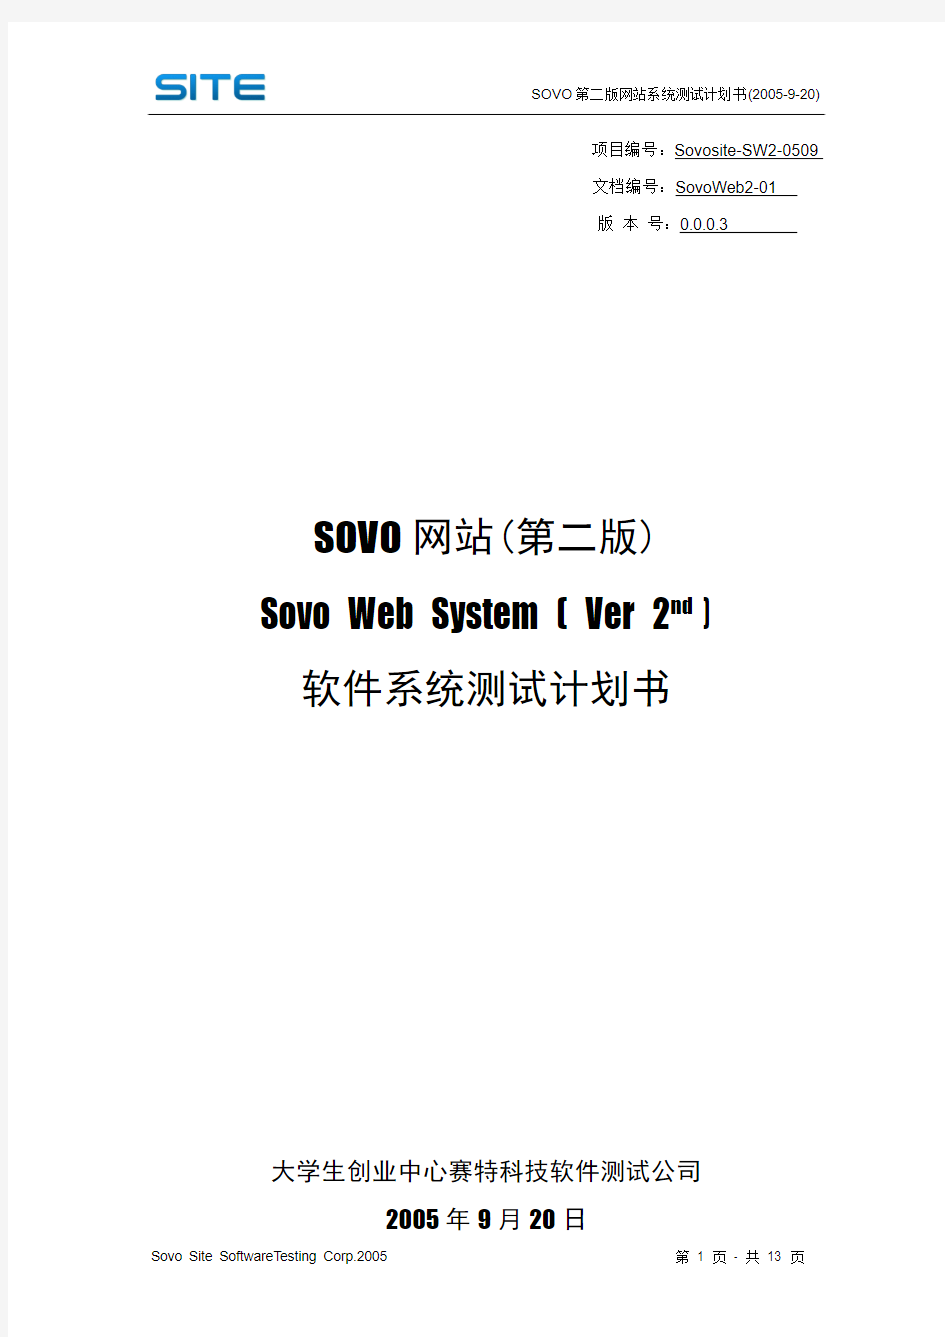 SOVO网站(第二版)系统测试计划书